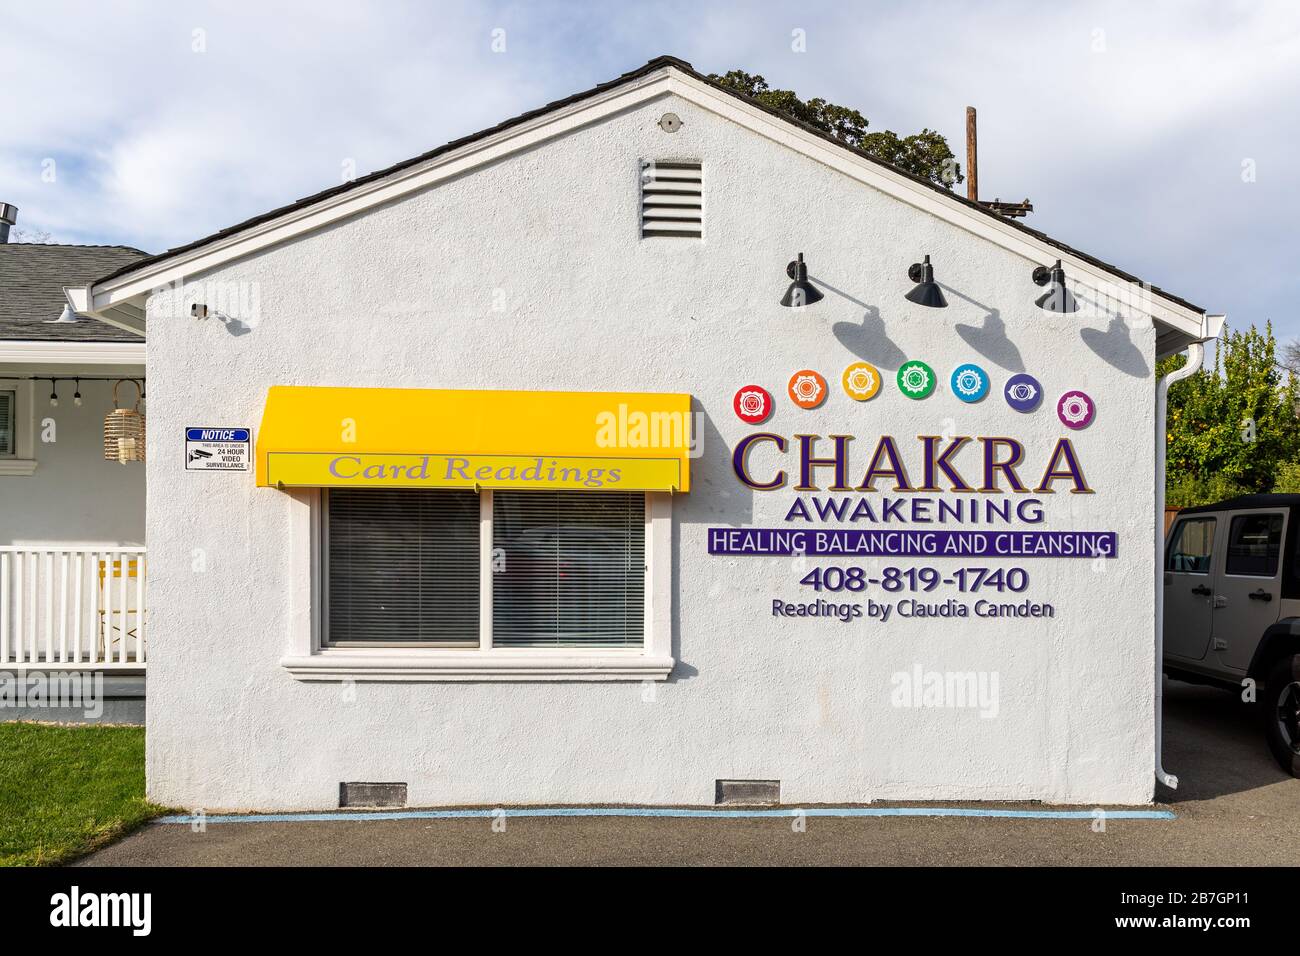 'Card Readings', 'Chakra Awakening', 'Healing Balancing & Cleansing', signs on house, San José, California, USA Stock Photo